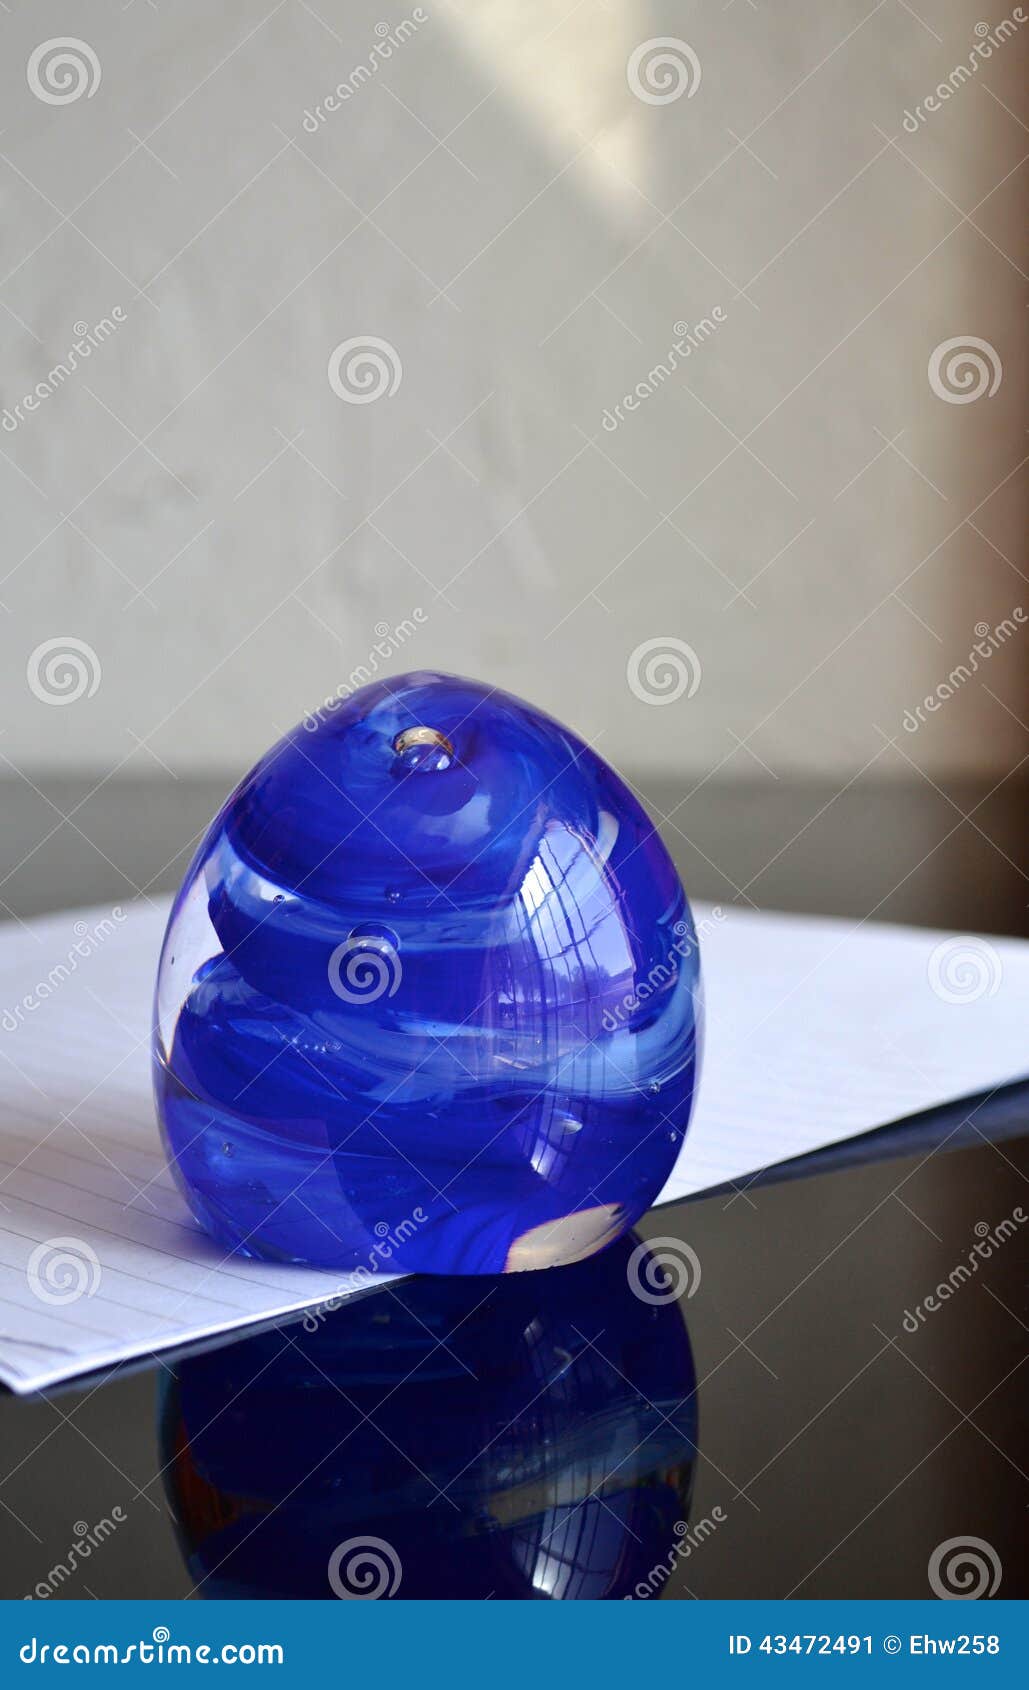 glass paperweight blue